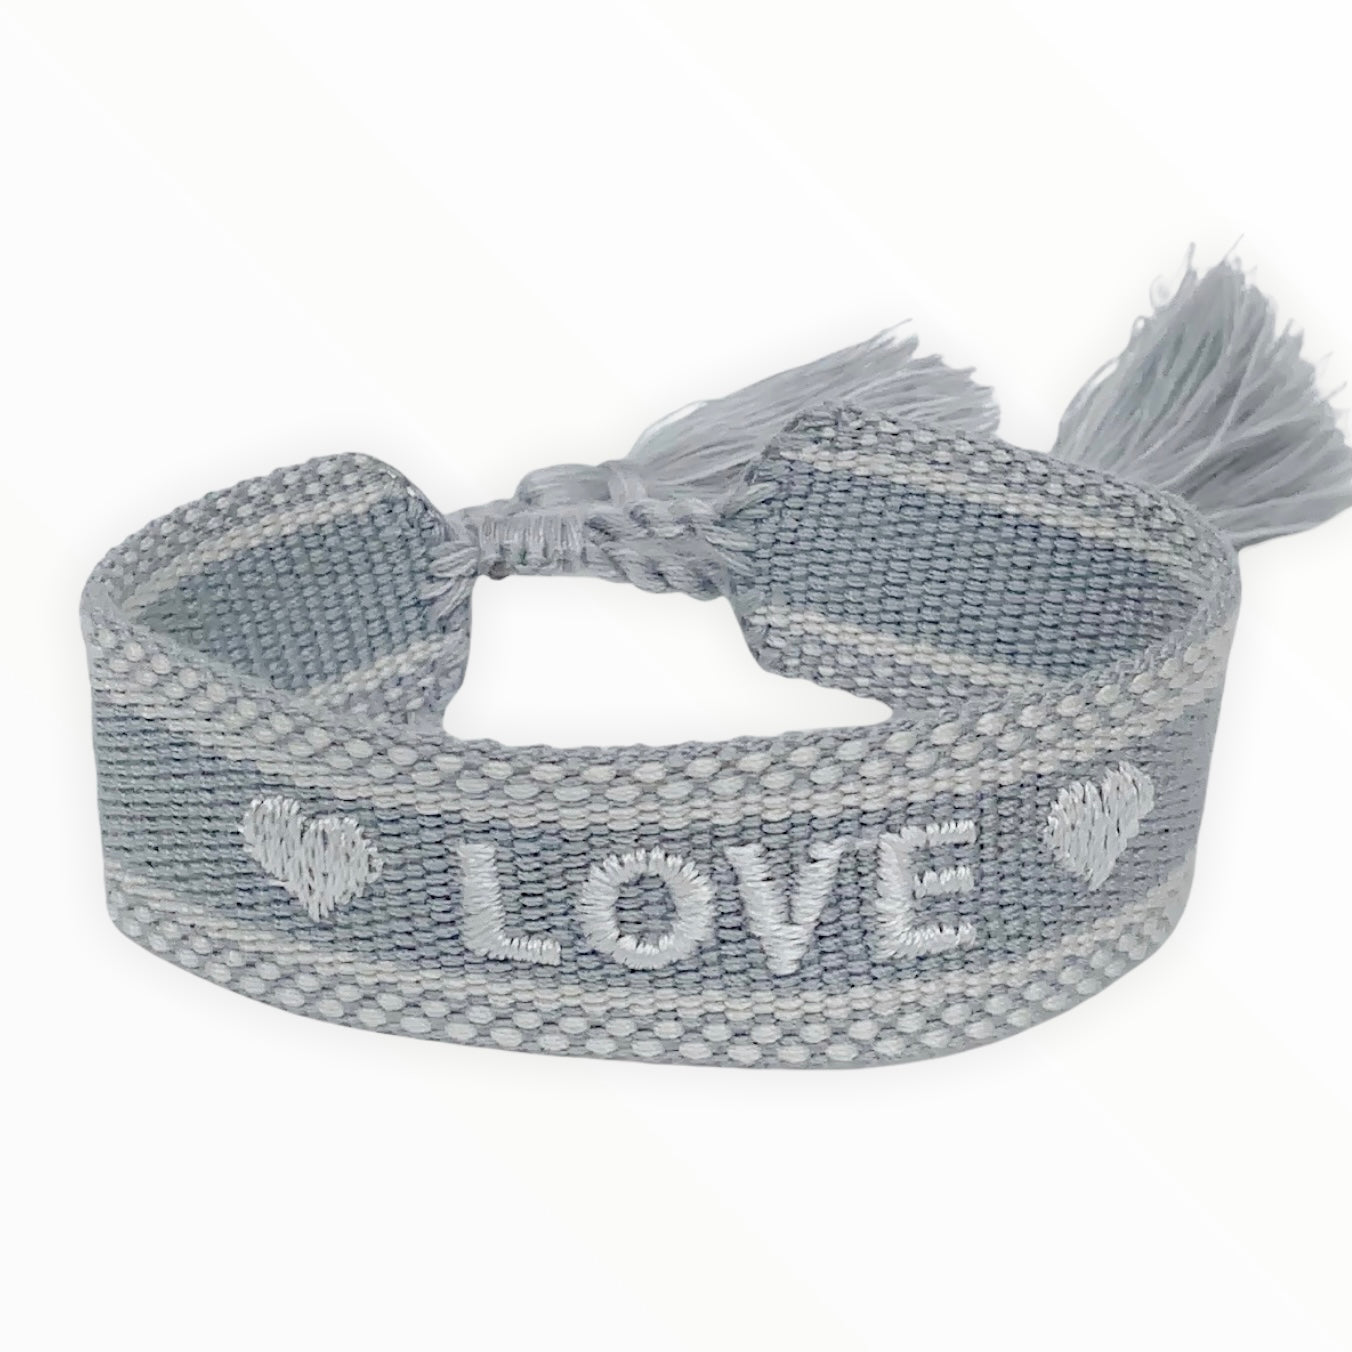 Love & Heart Woven Bracelet